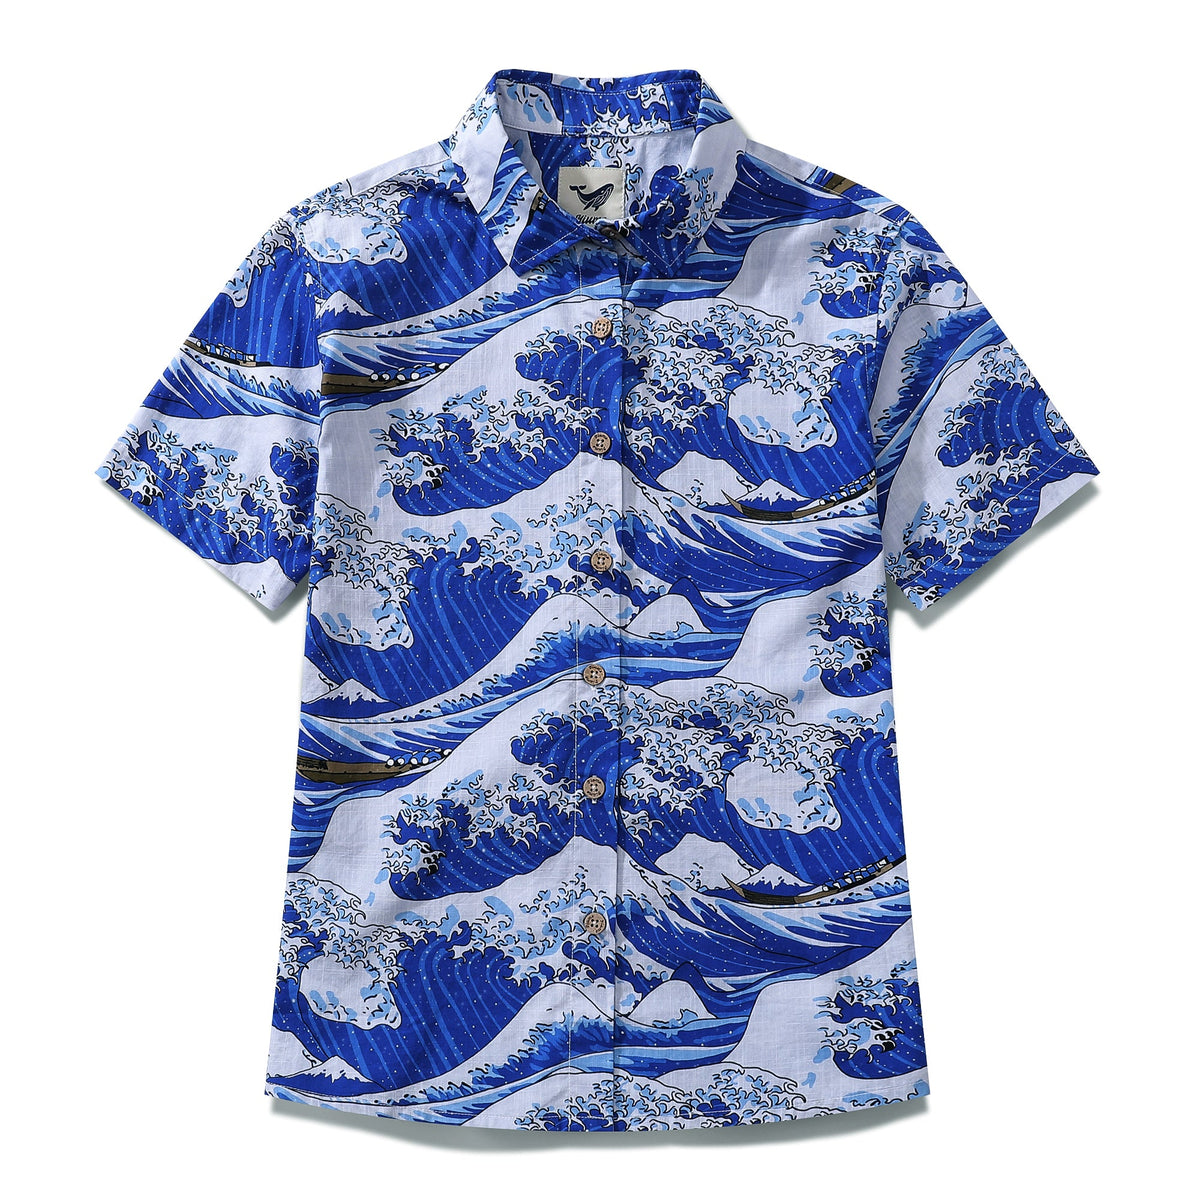 Women's Hawaiian Shirt Ocean Waves Japanese Ukiyo-e Print Cotton Butto ...